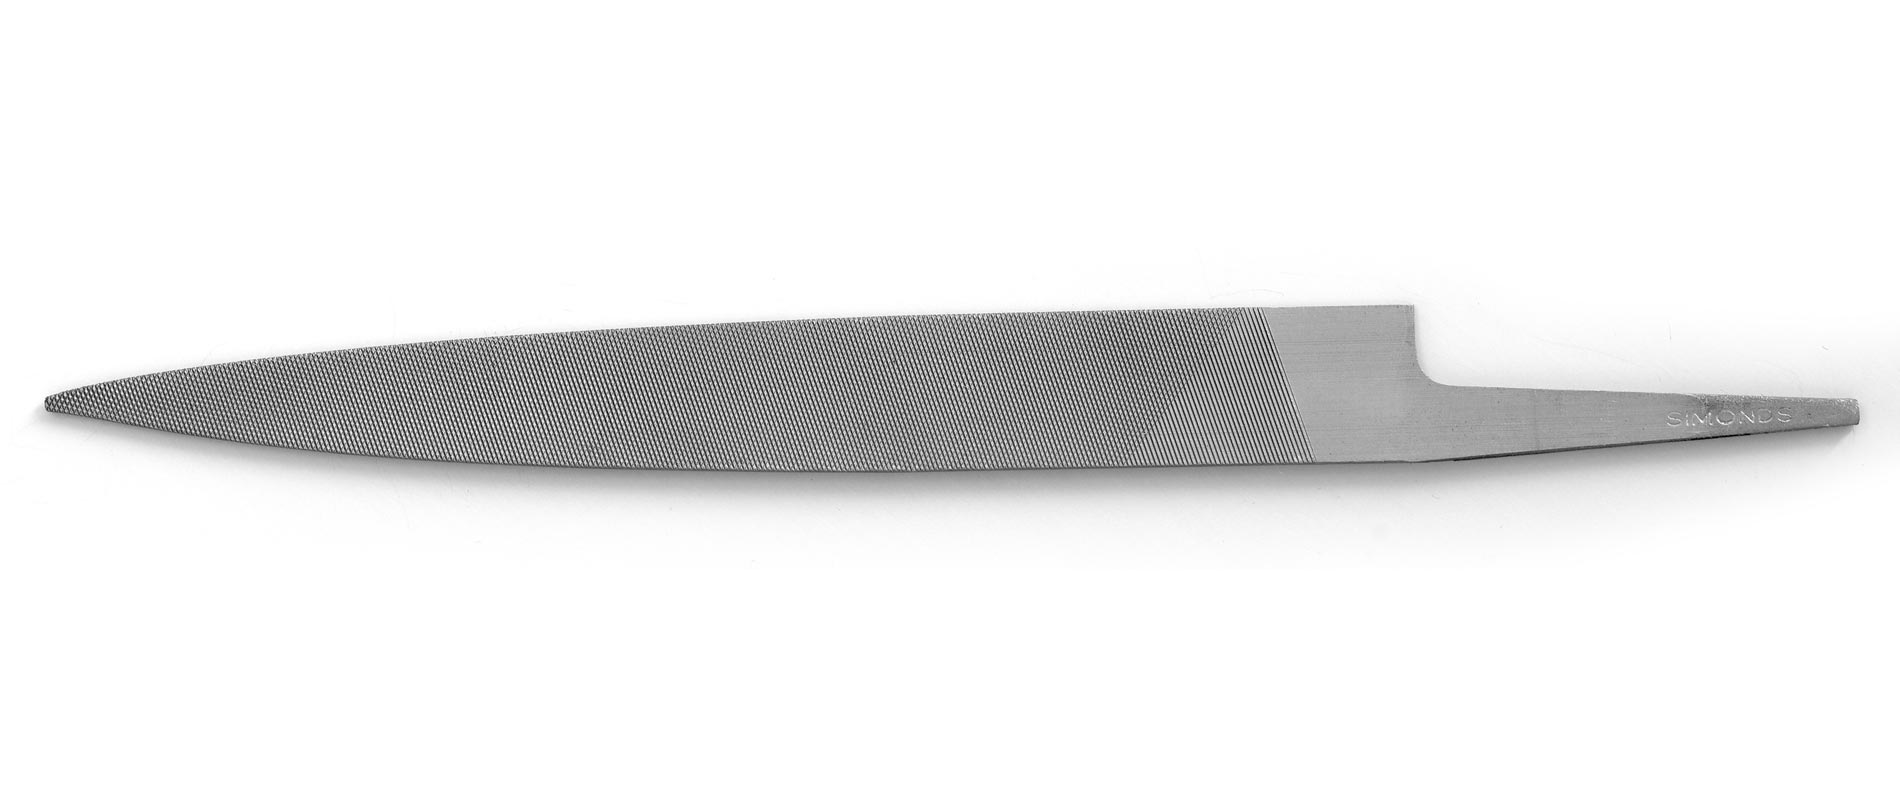 Generic Knife Edge File, Size 15cm 